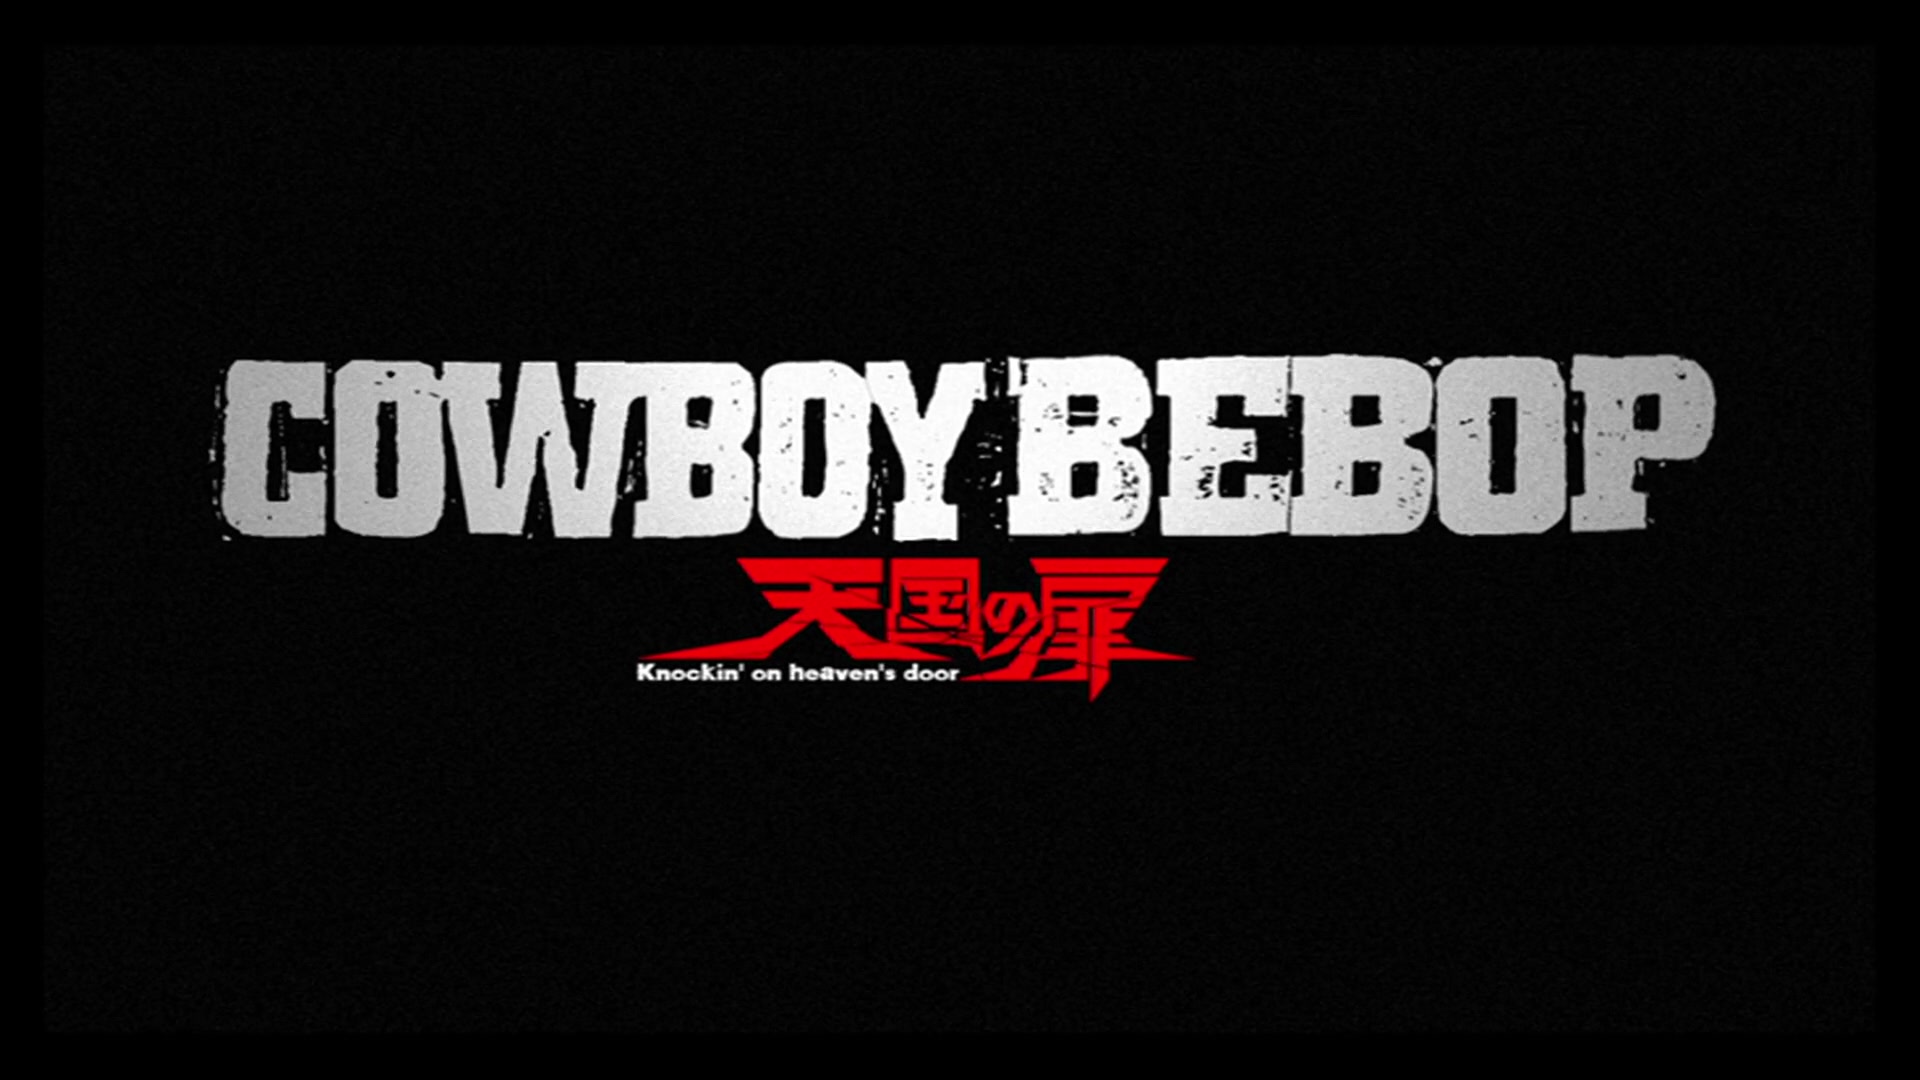 [1080p]Cowboy Bebop the Movie Knockin'on heaven's door NCOP/ED